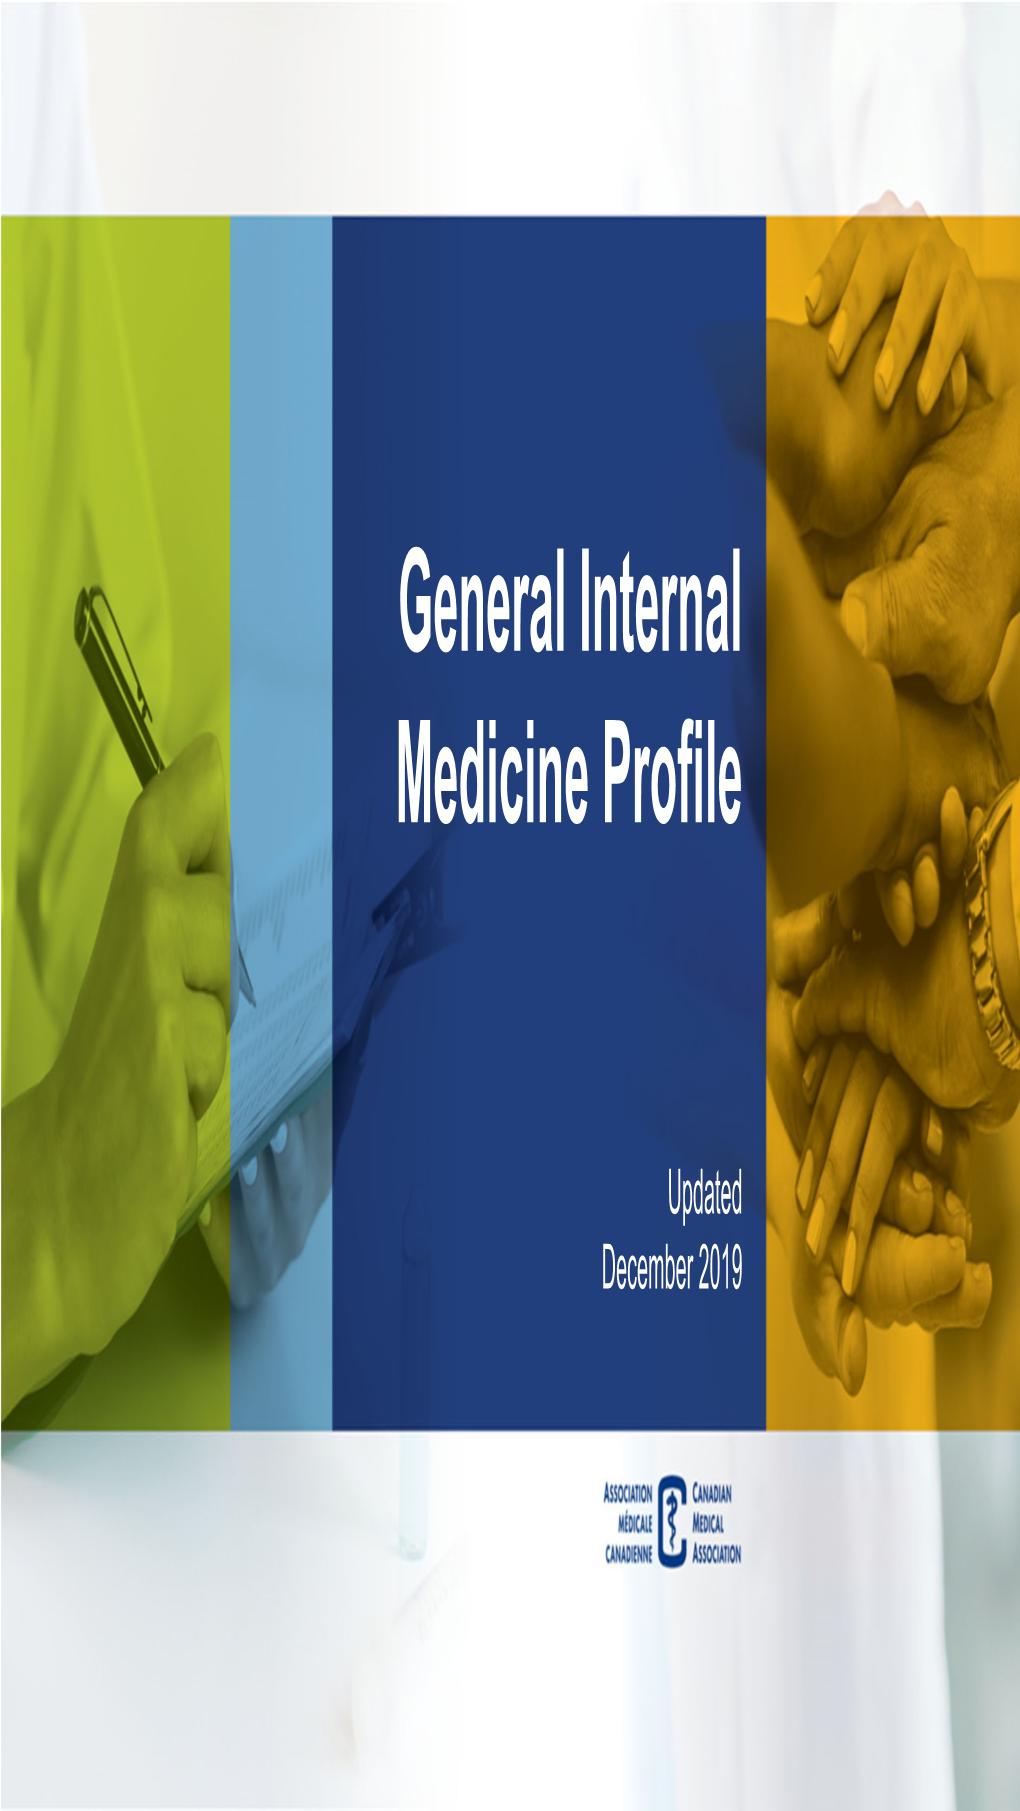 General Internal Medicine Profile